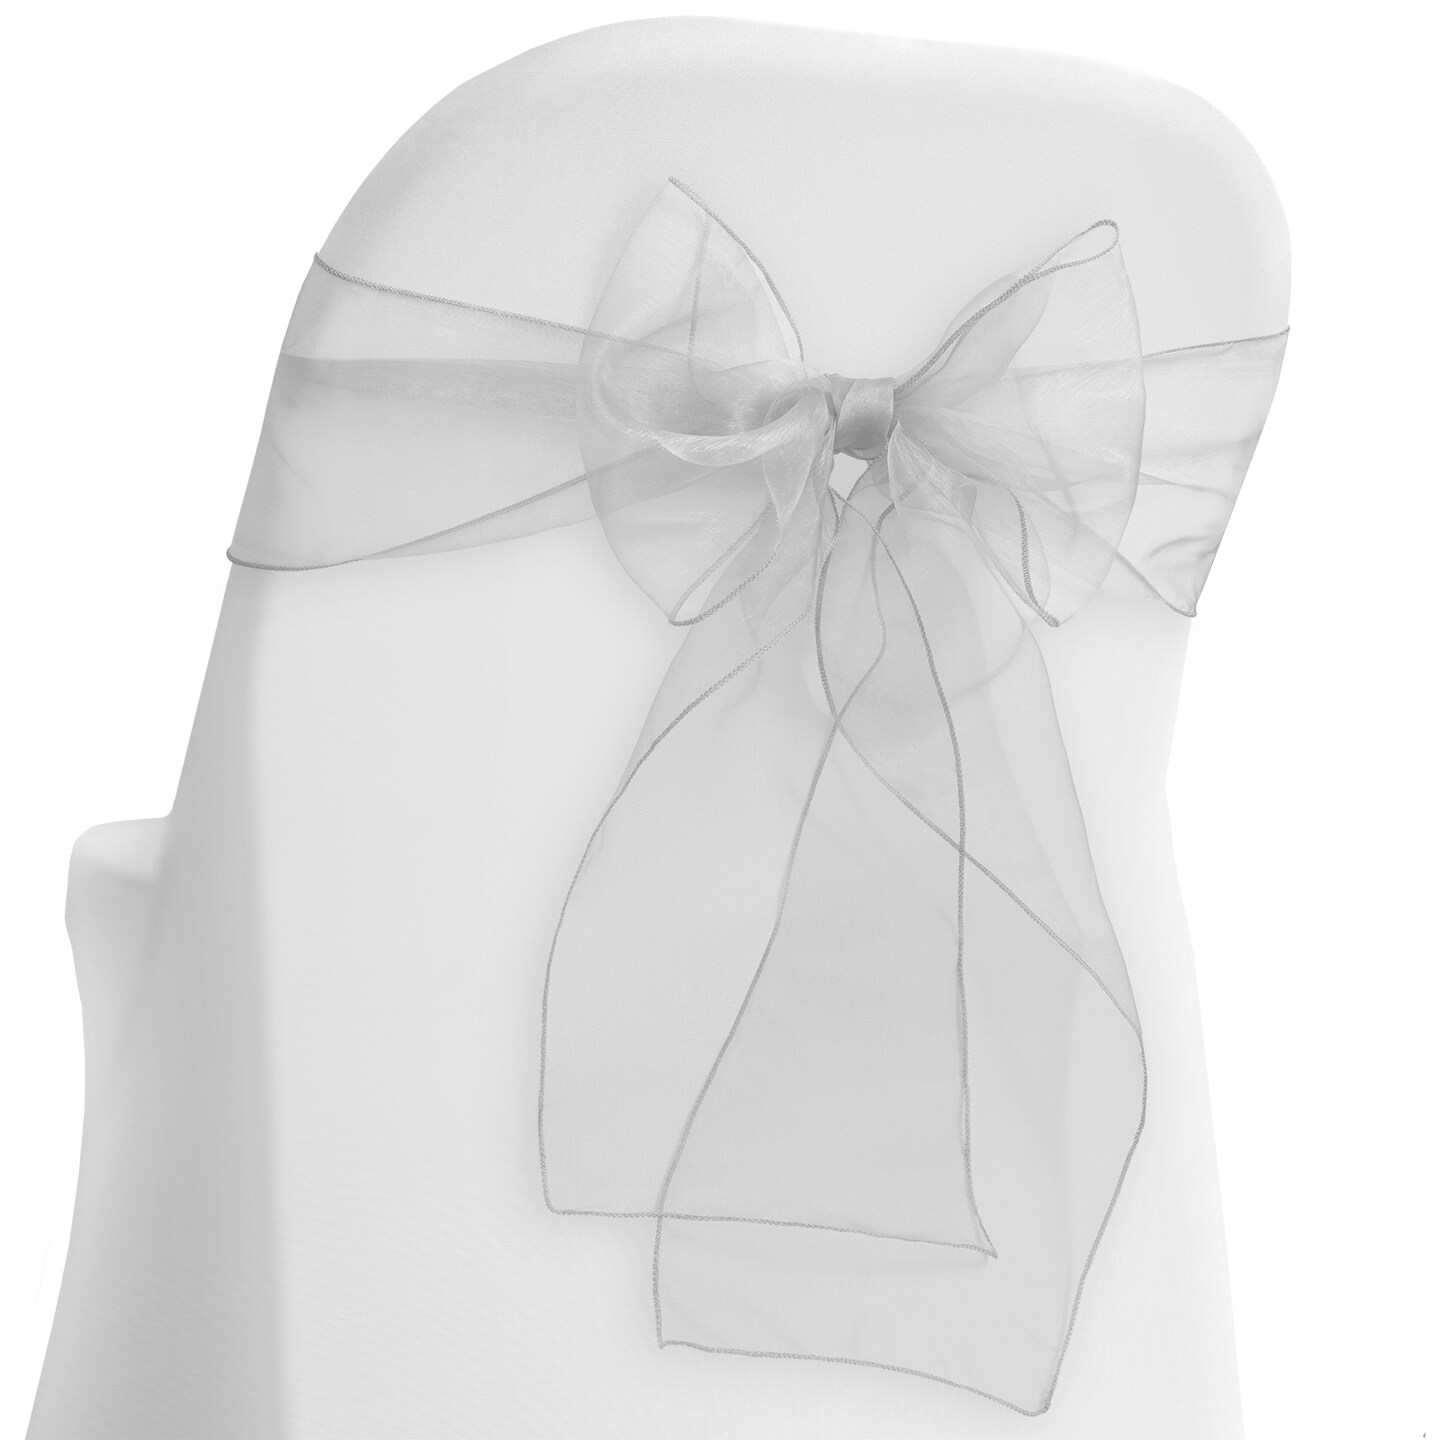 Lann&#x27;s Linens - 10 Elegant Organza Wedding/Party Chair Cover Sashes/Bows - Ribbon Tie Back Sash